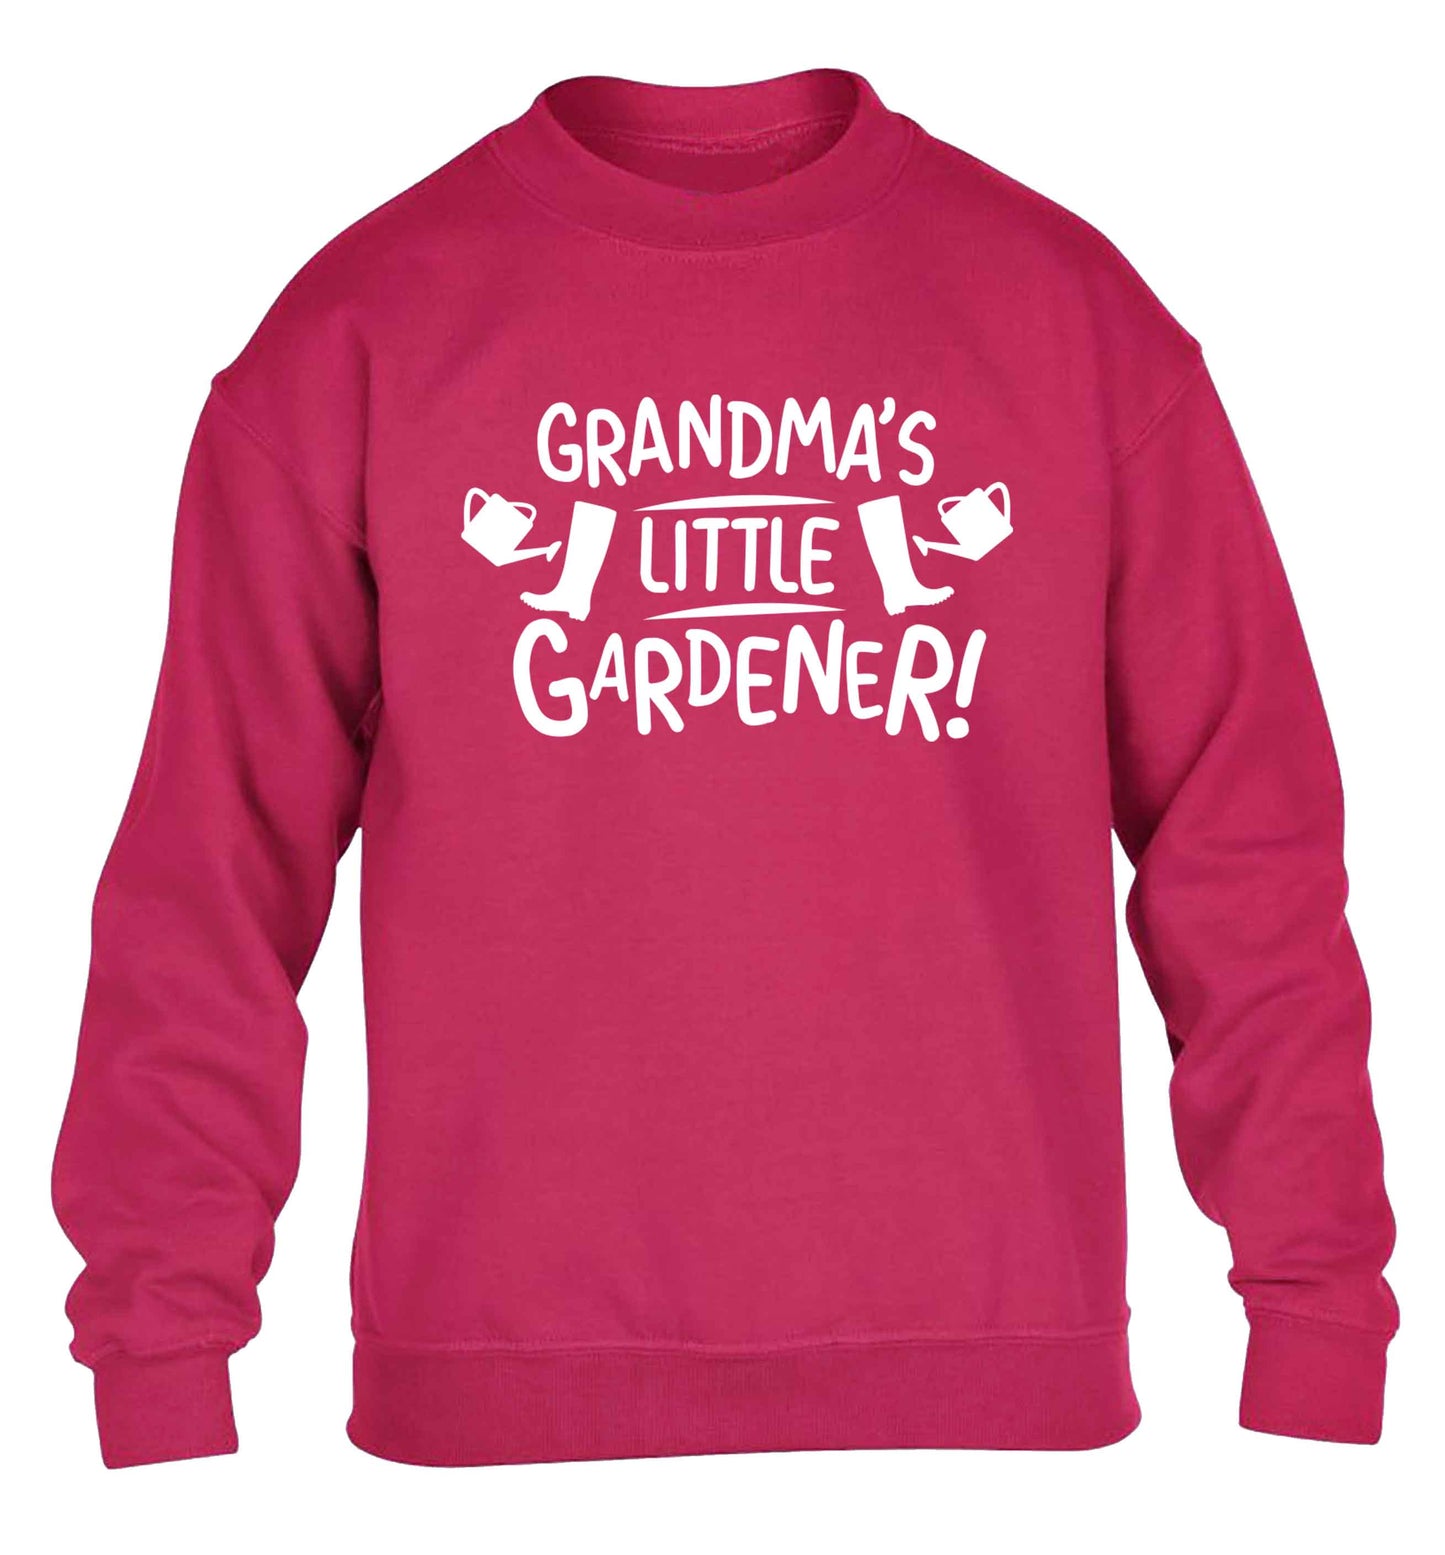 Grandma's little gardener children's pink sweater 12-13 Years